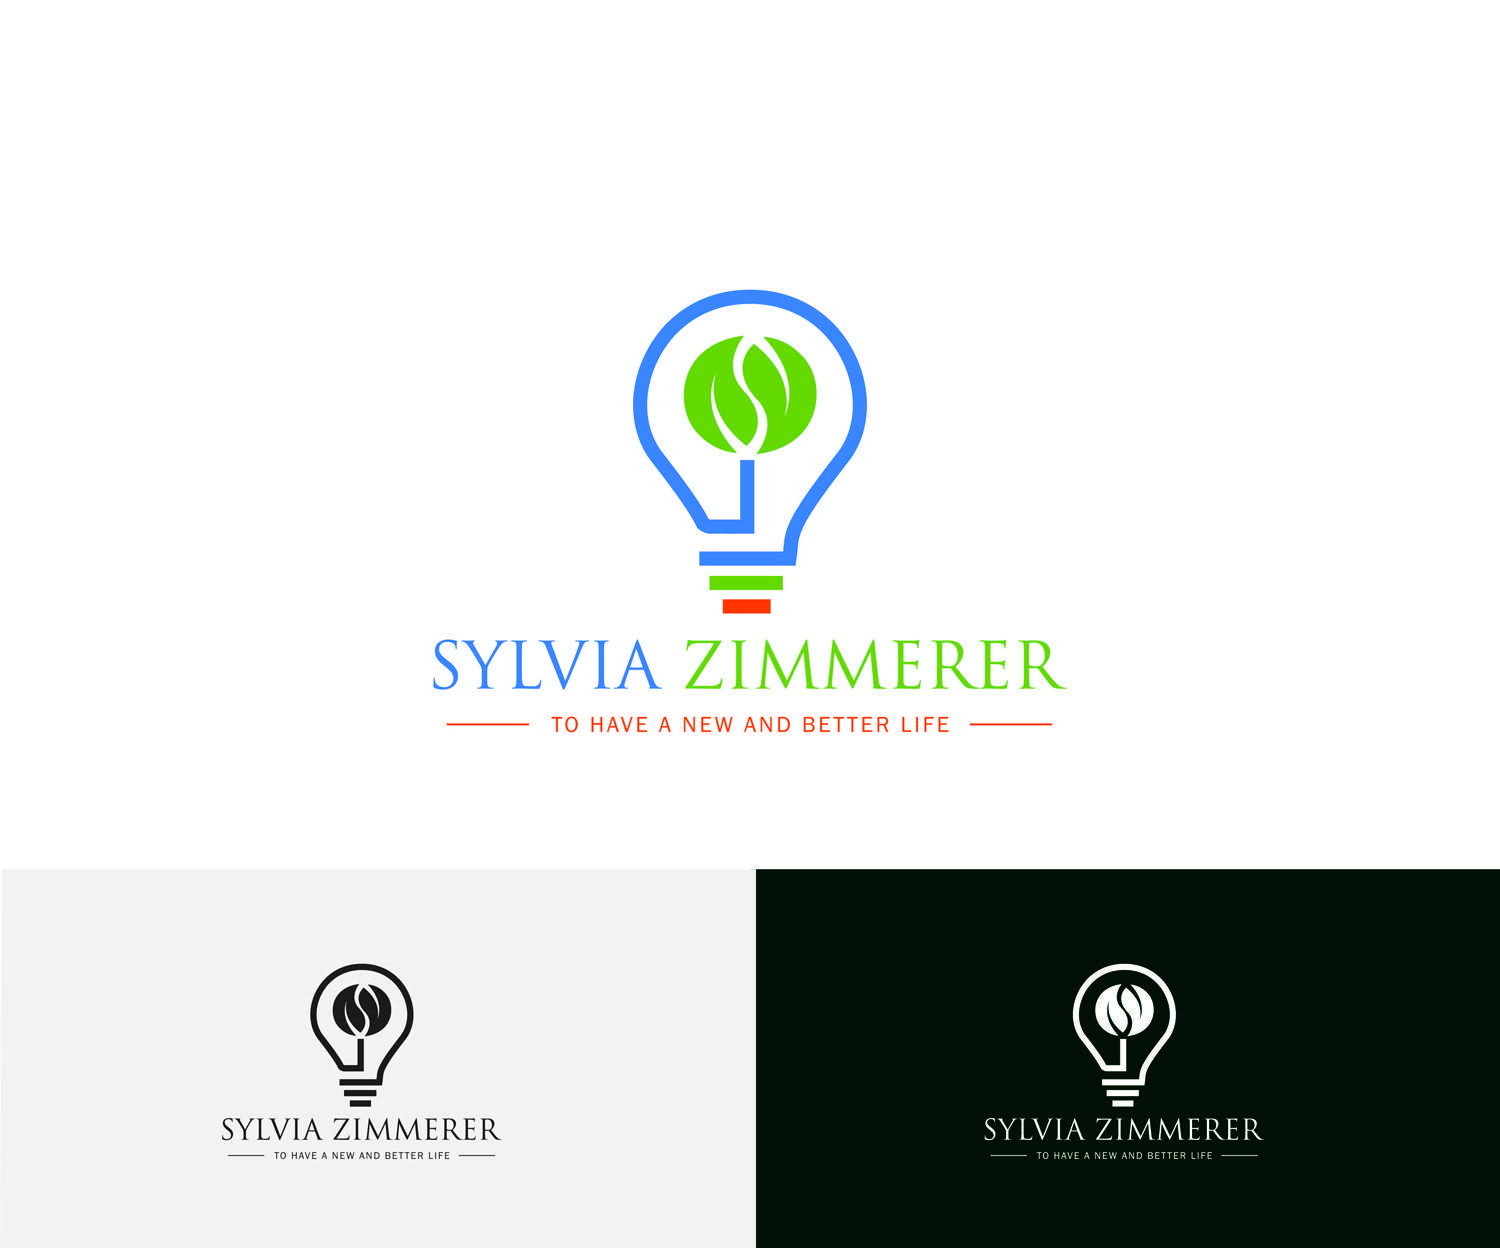 Moat Logo - Upmarket, Elegant, Life Coaching Logo Design for Sylvia Zimmerer by ...